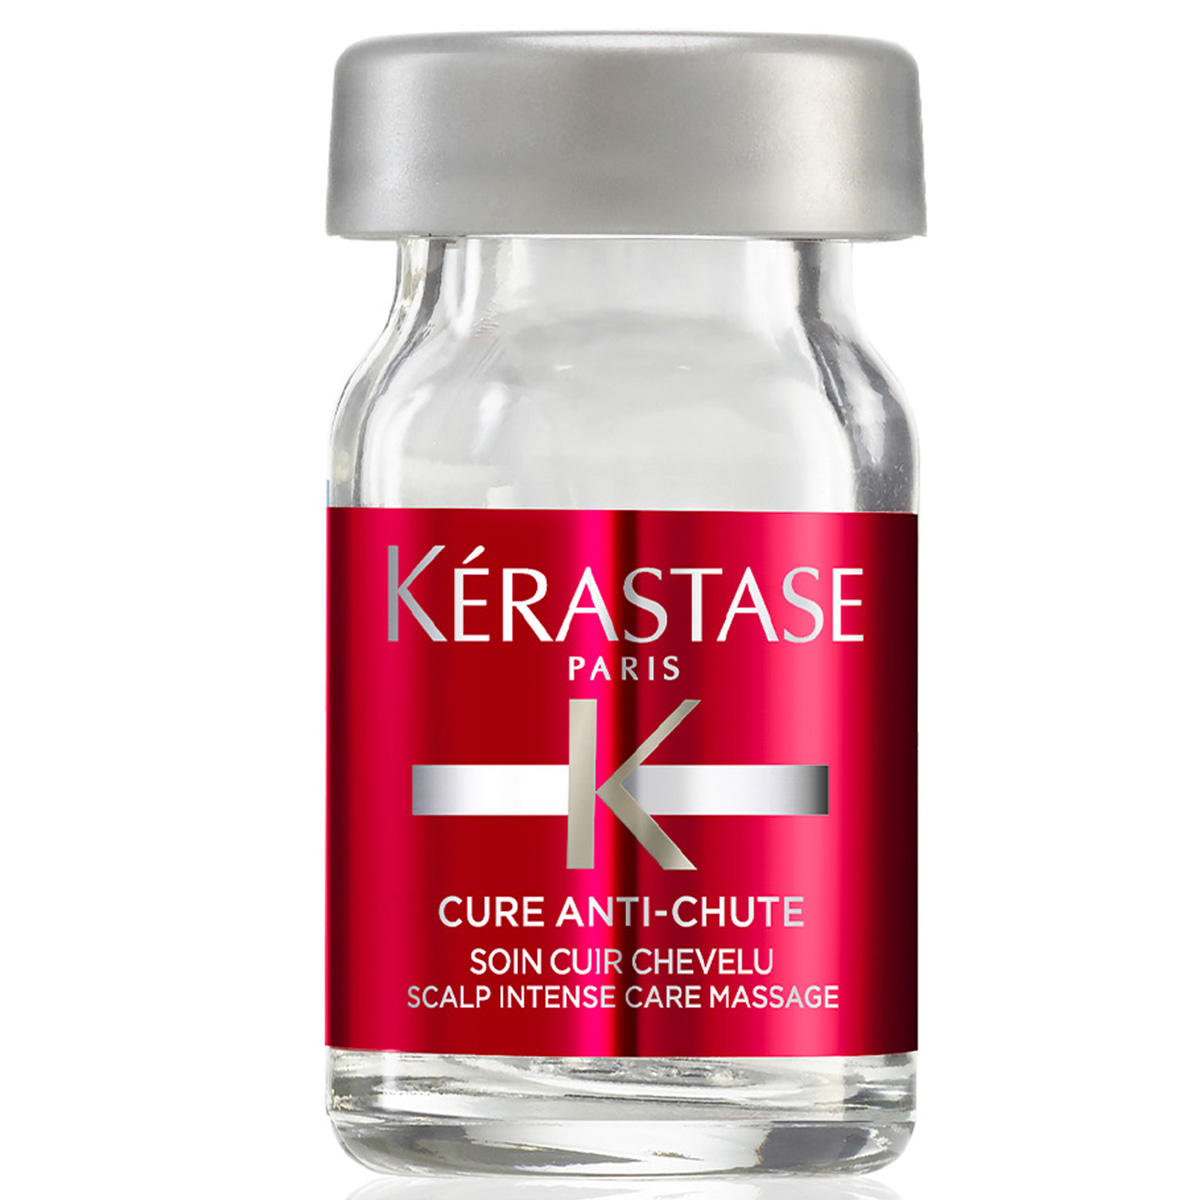 Kérastase Spécifique Cure Anti-Chute Package with 10 x 6 ml